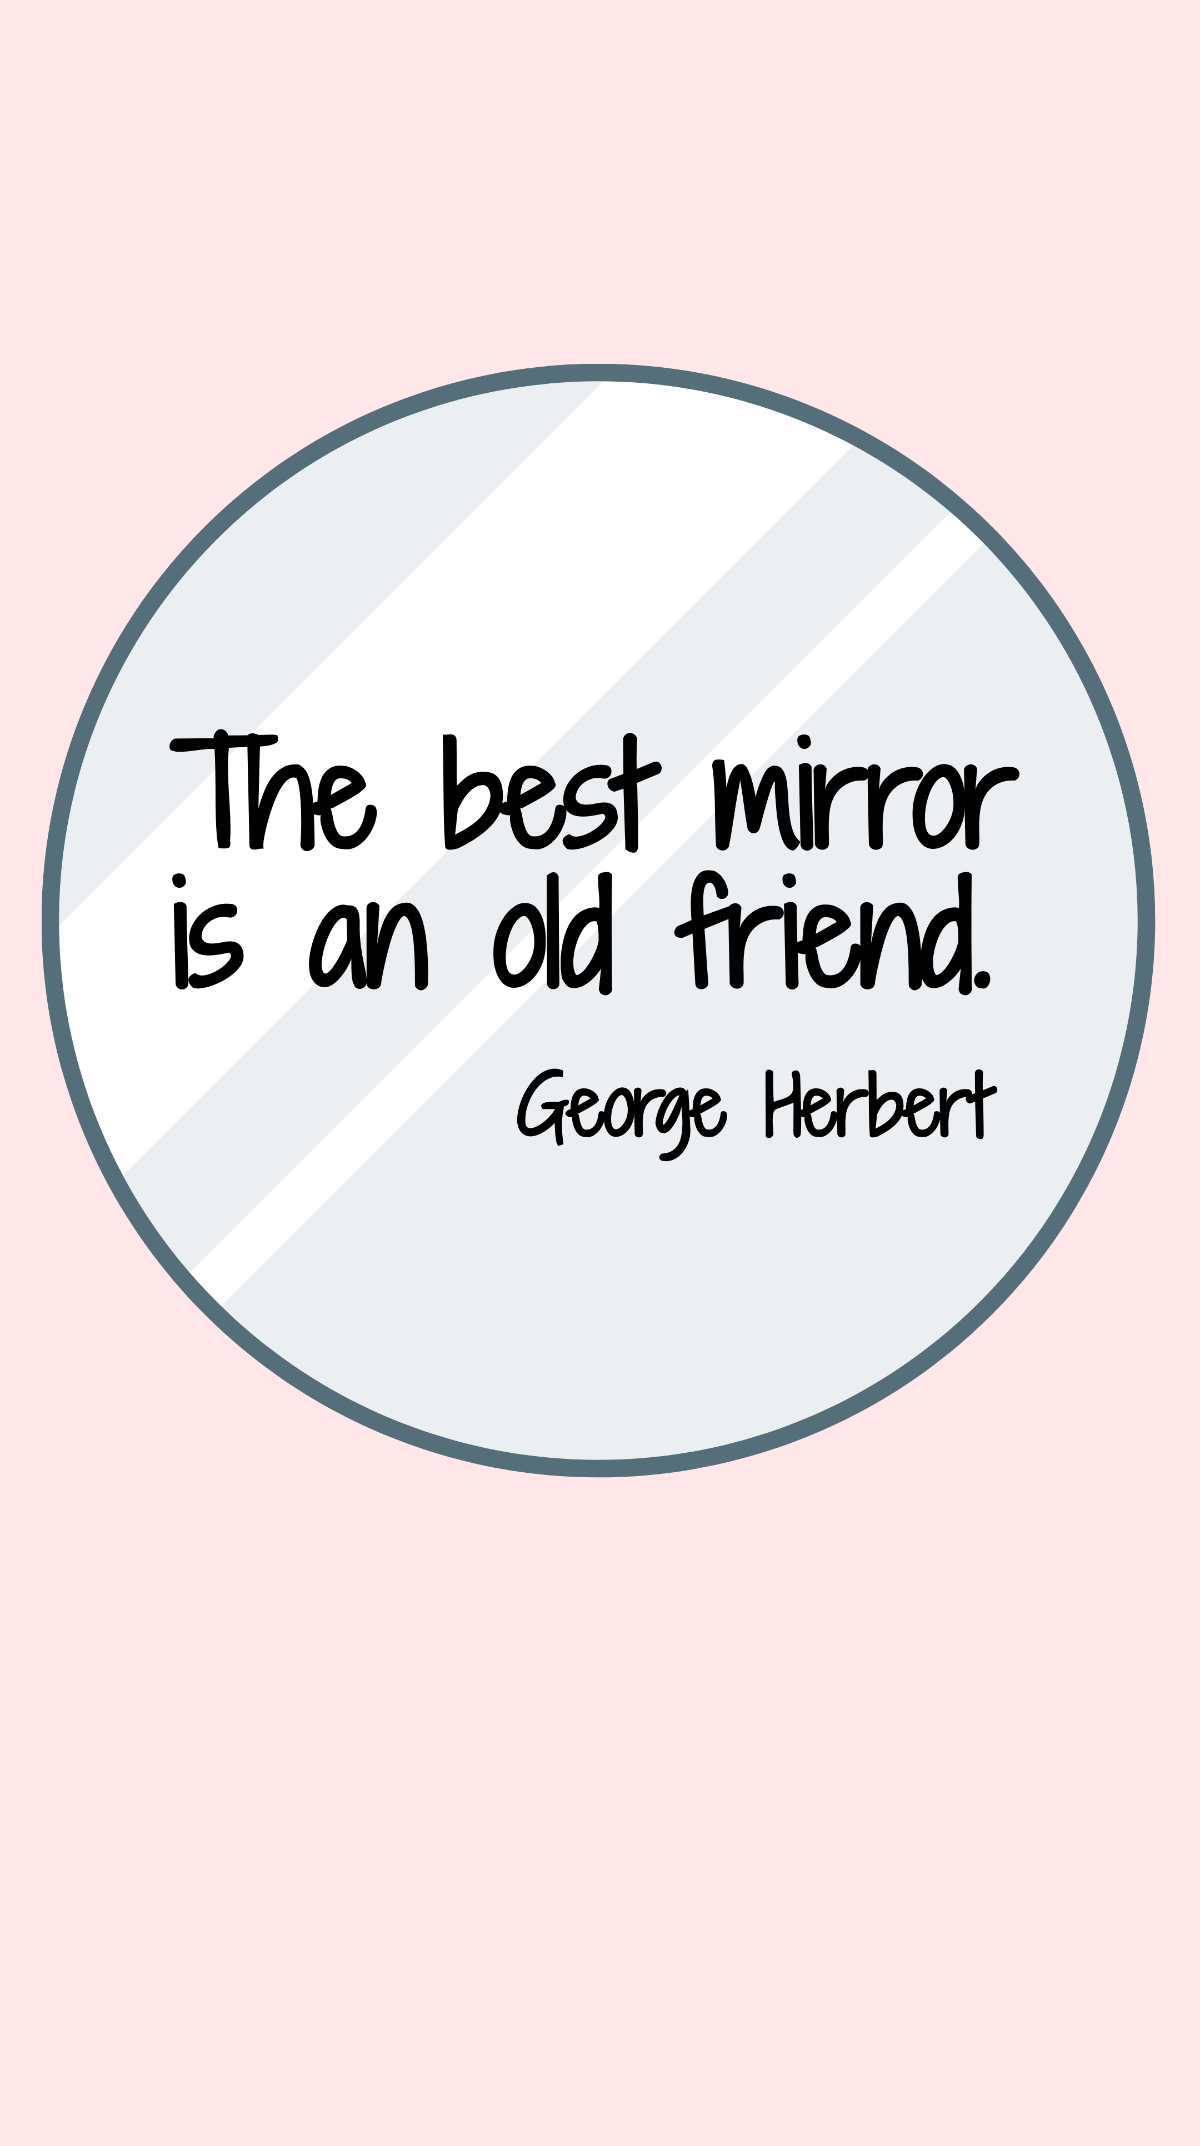 George Herbert - The best mirror is an old friend. Template